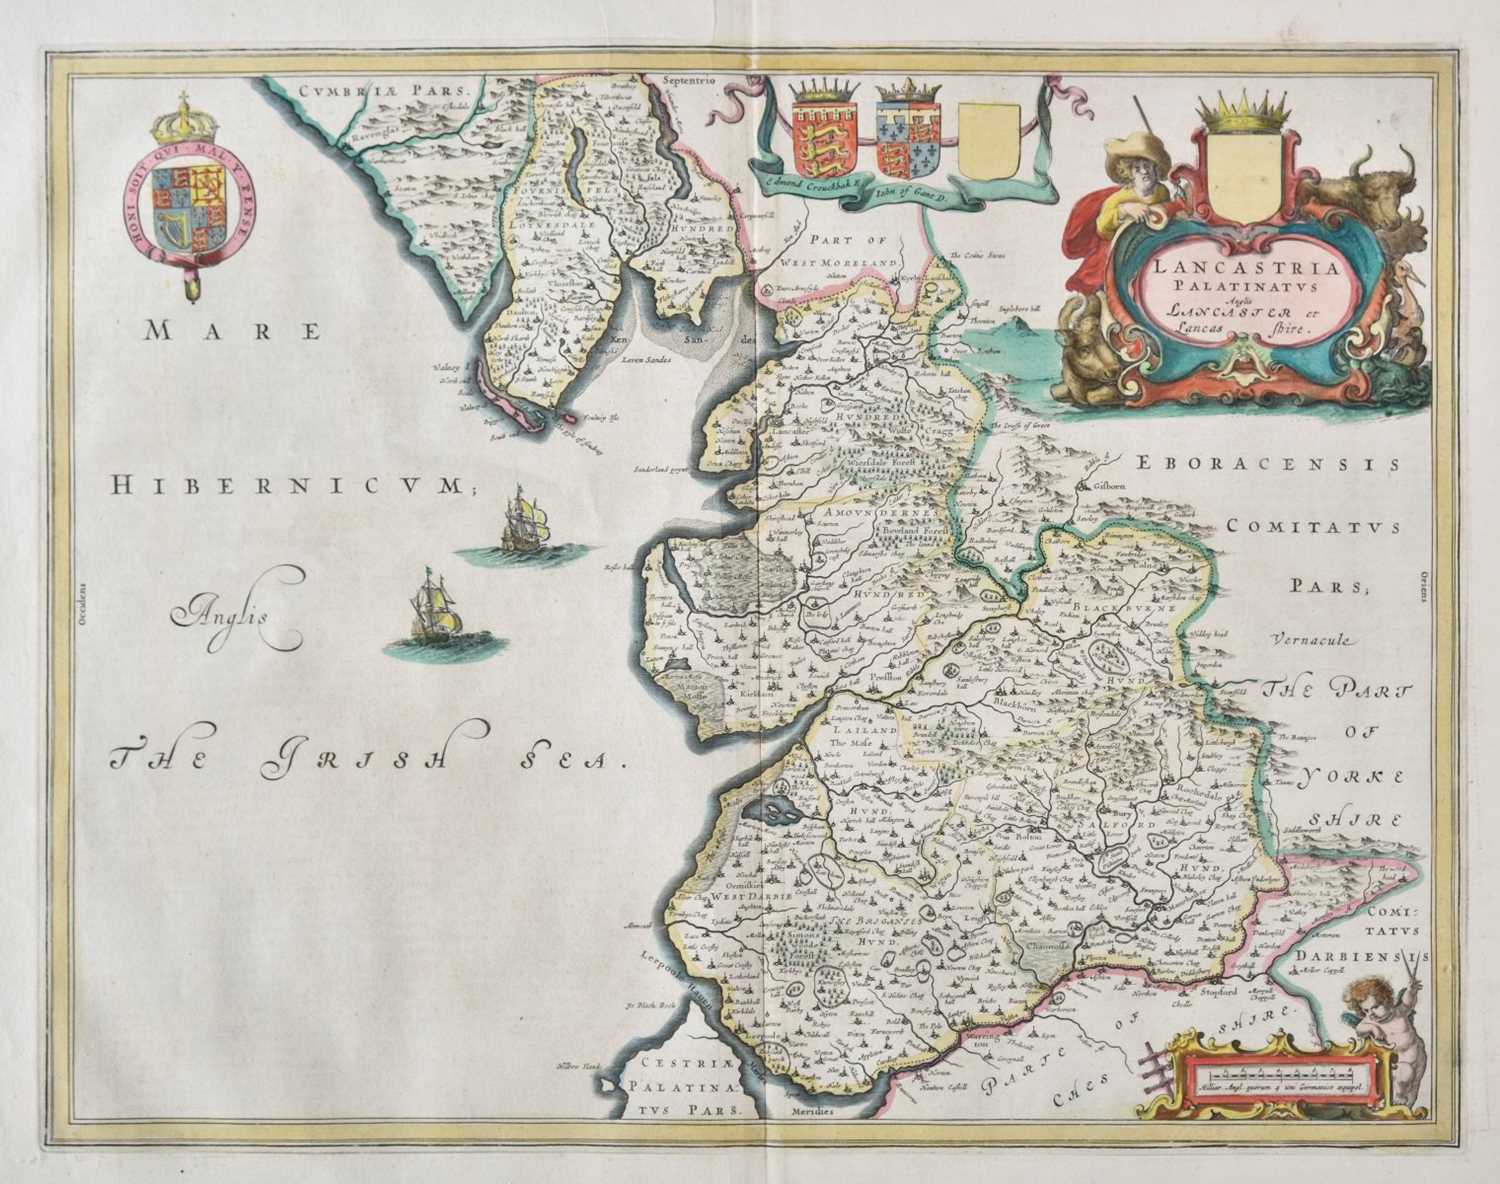 Lot 52 - Lancashire. Blaeu (Johannes), Lancastria Palatinatus Anglis Lancaster et Lancasshire, circa 1645